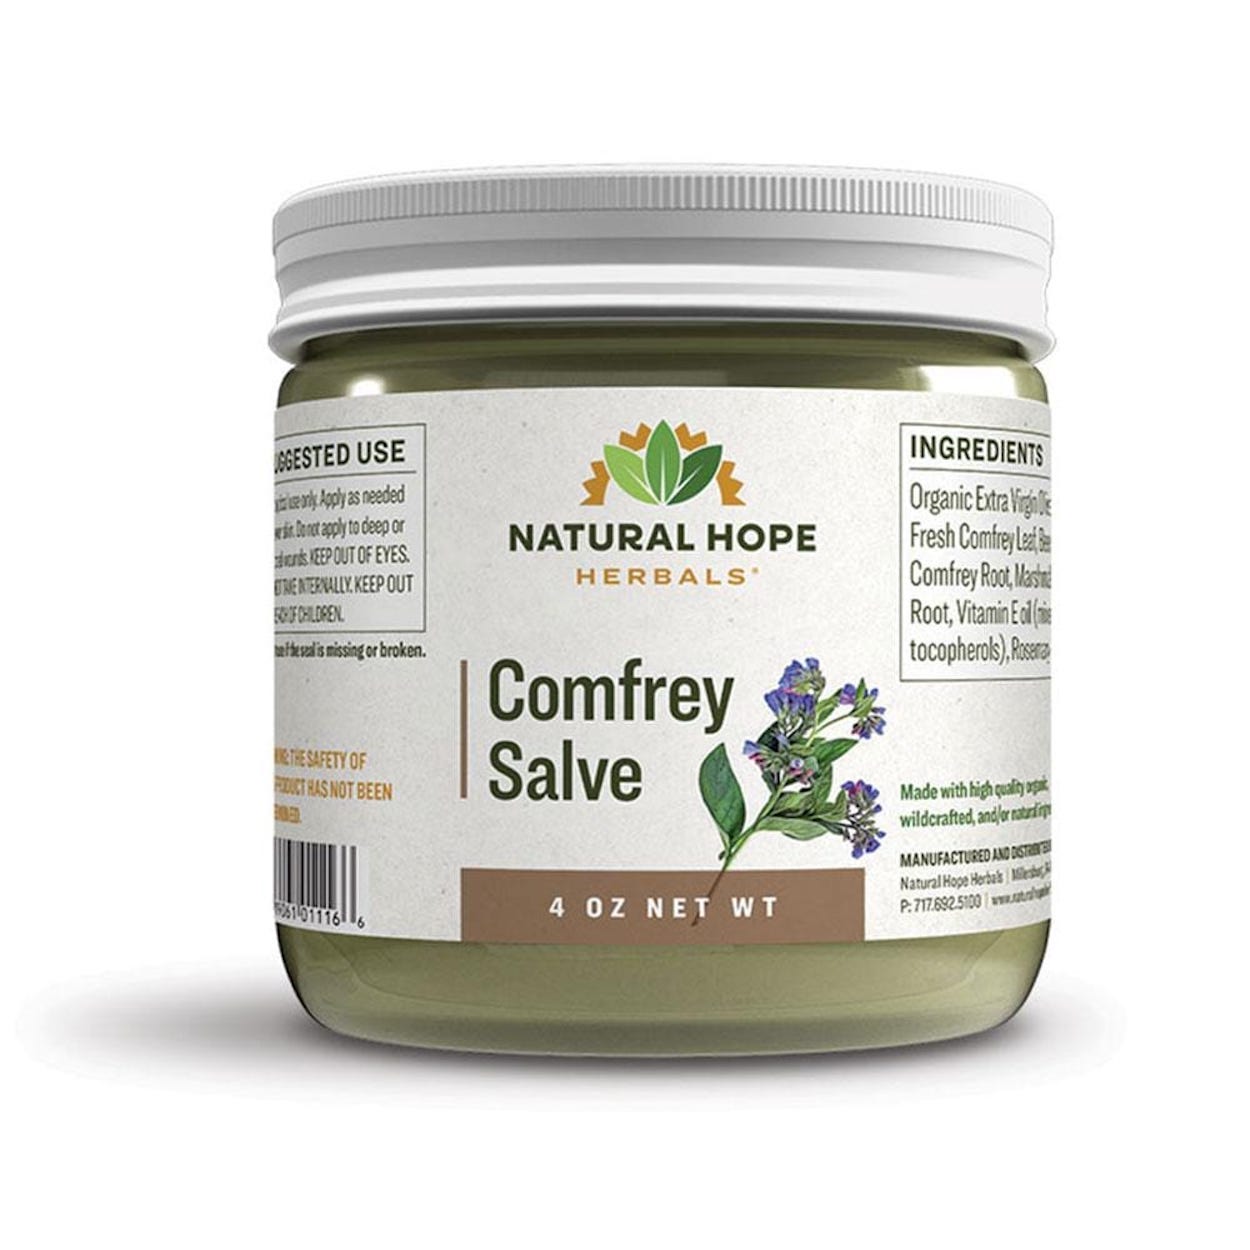 Comfrey Salve - Natural Hope Herbals